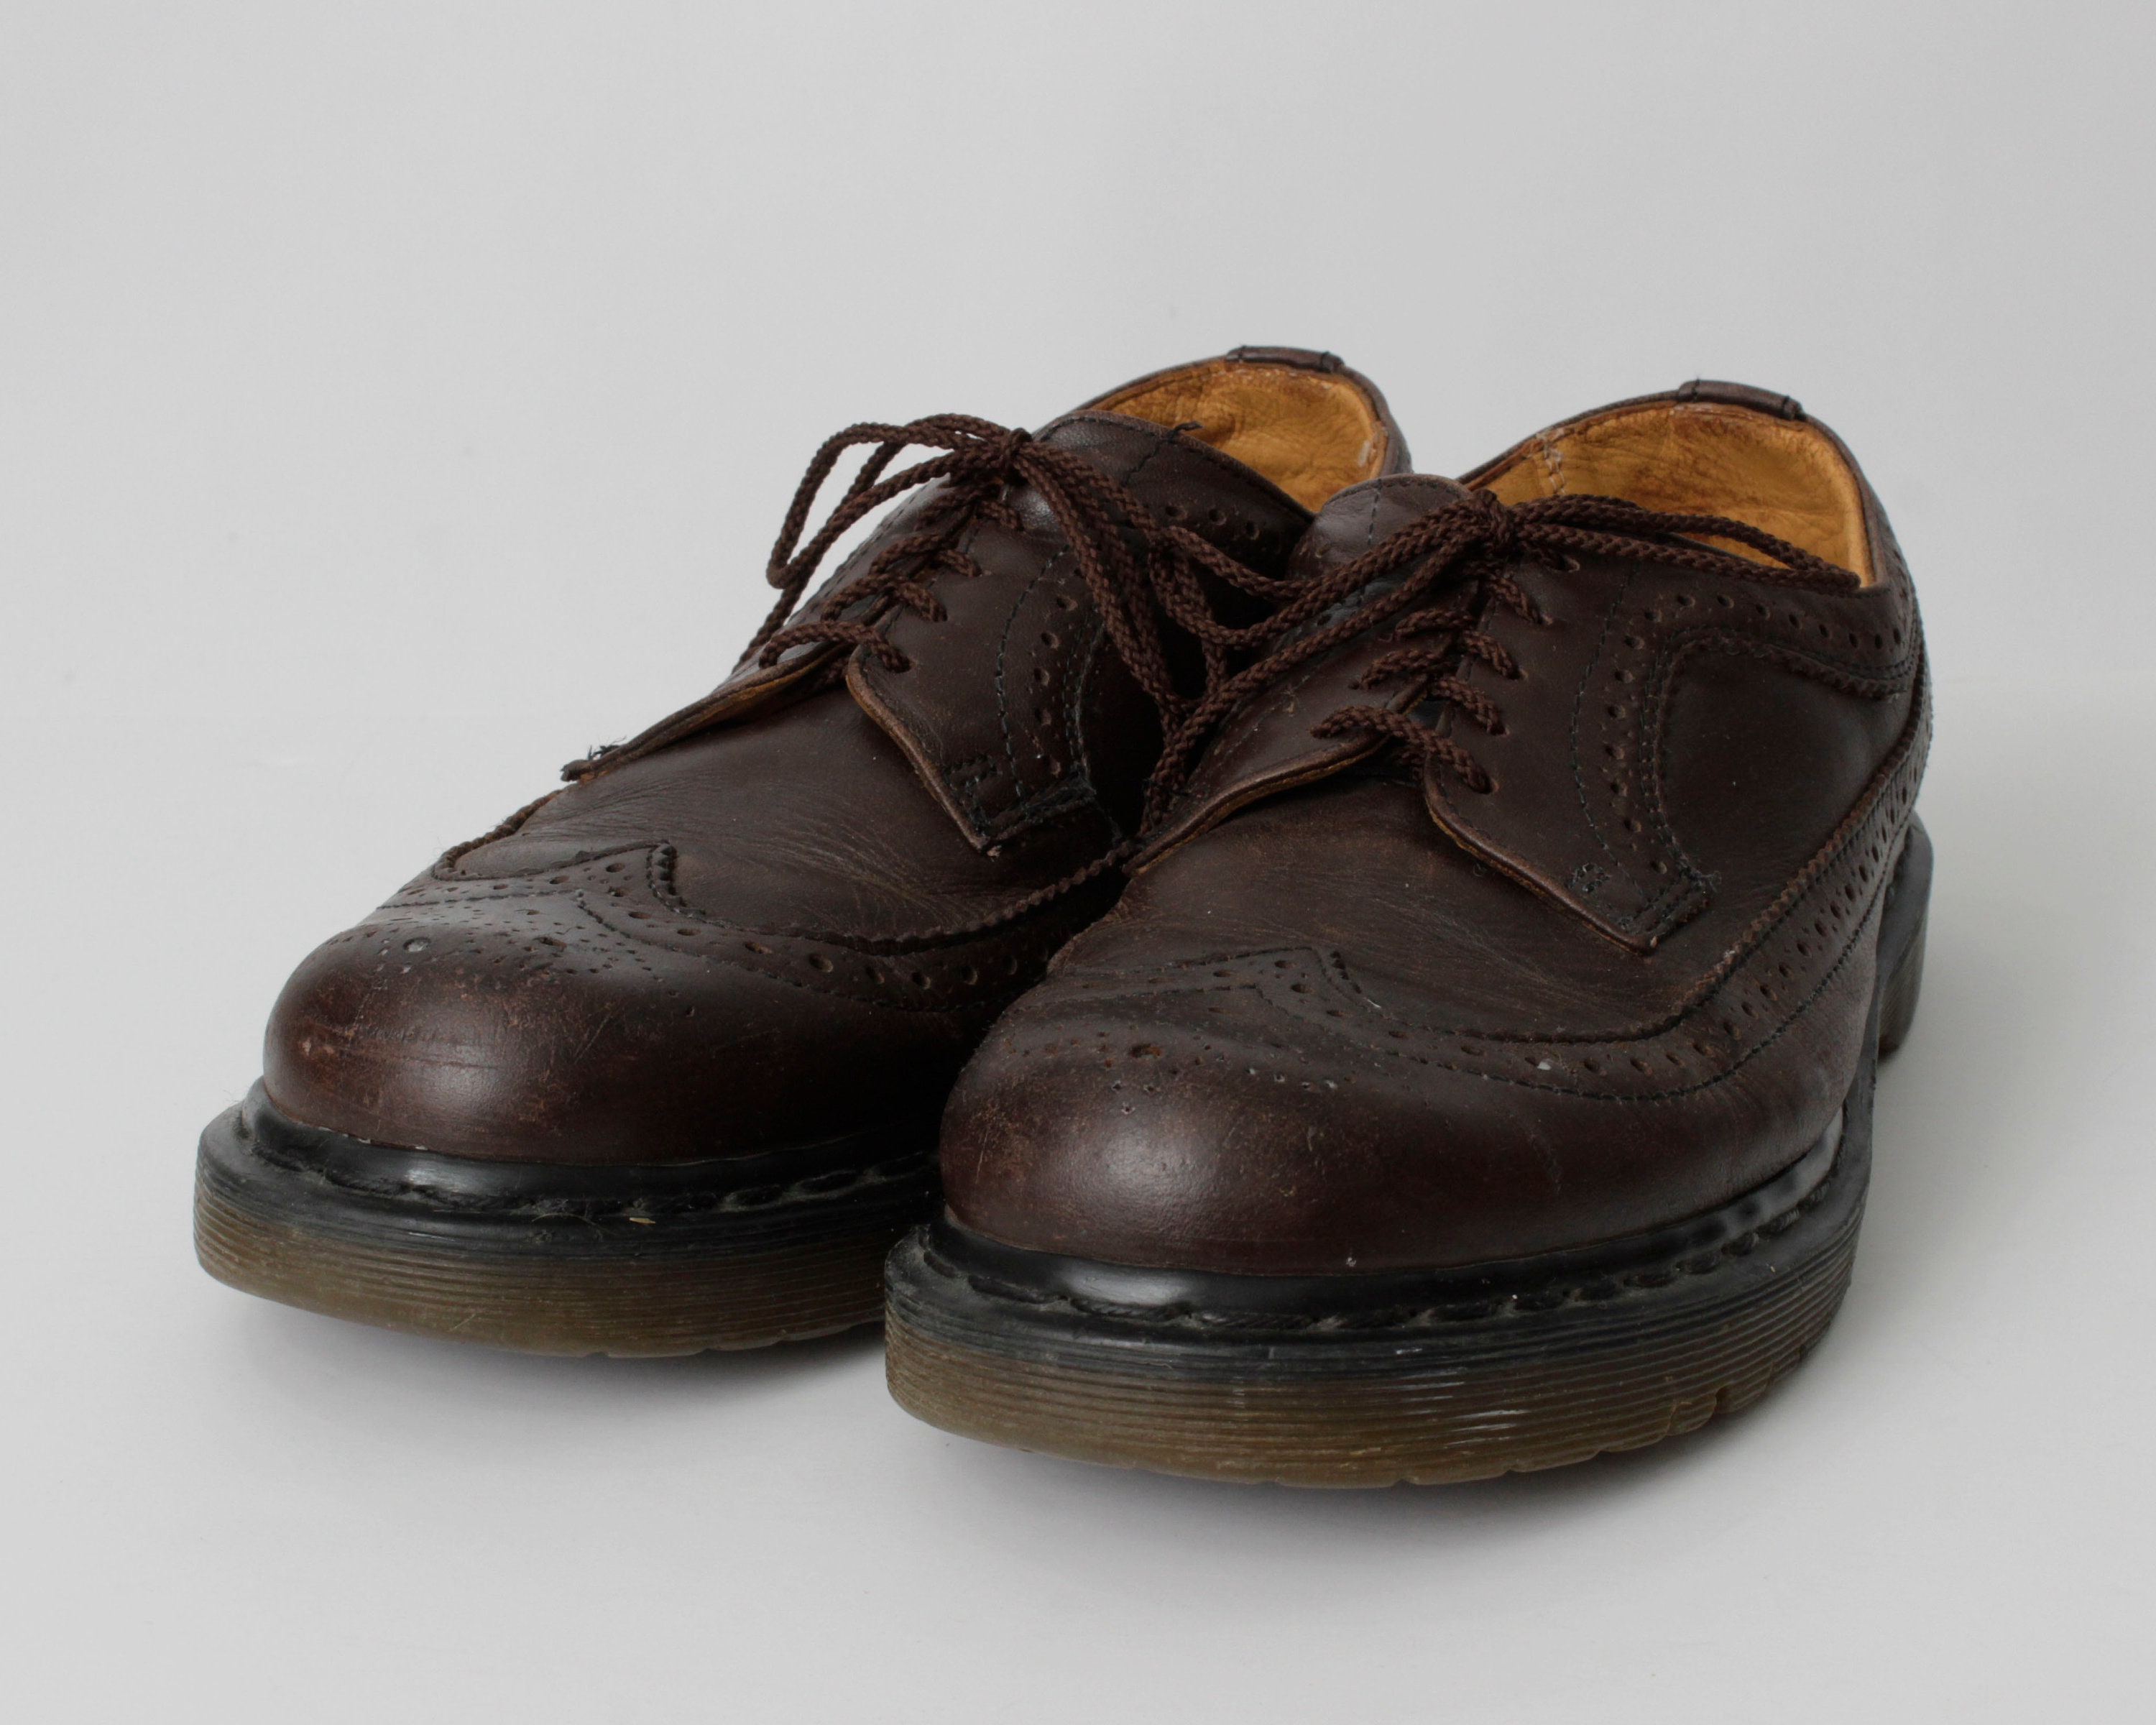 Vintage 70s Imexplet mens Shoes Size 11 Brown Woven Huarache Leather Oxfords Schoenen Herenschoenen Oxfords & Wingtips 